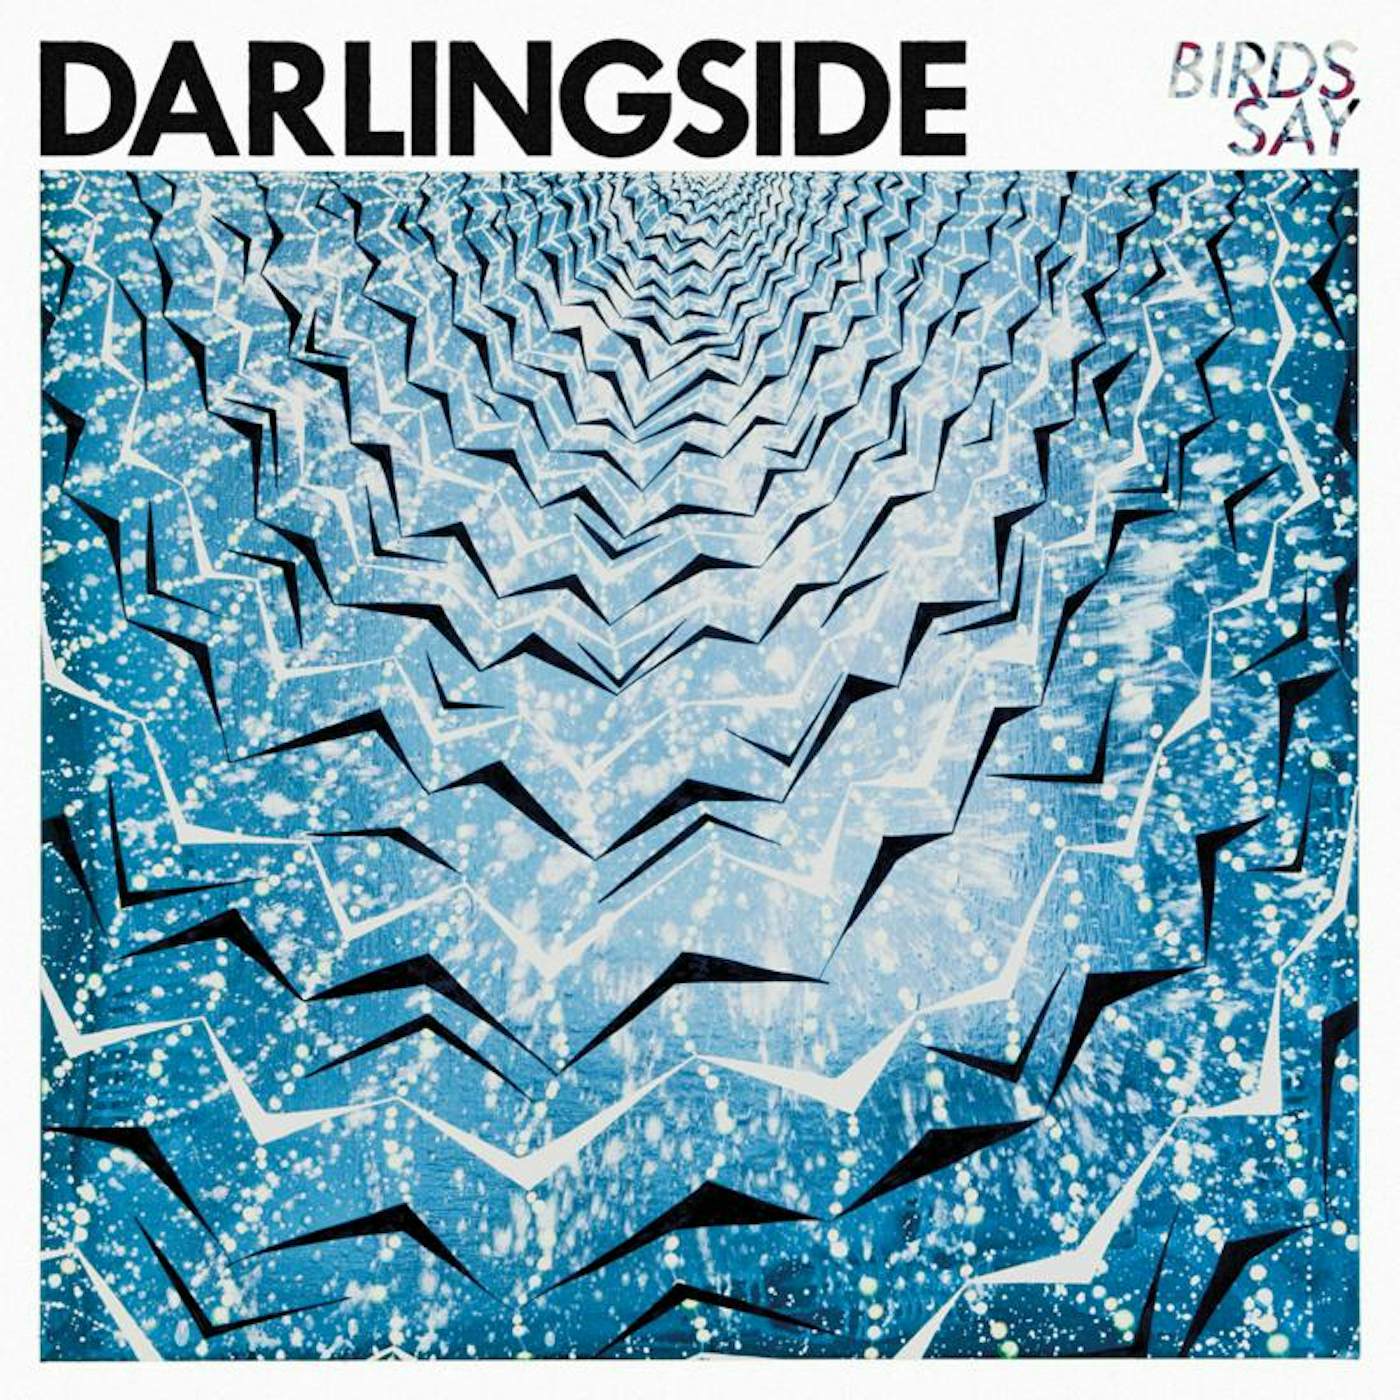 Darlingside LP - Birds Say (Vinyl)